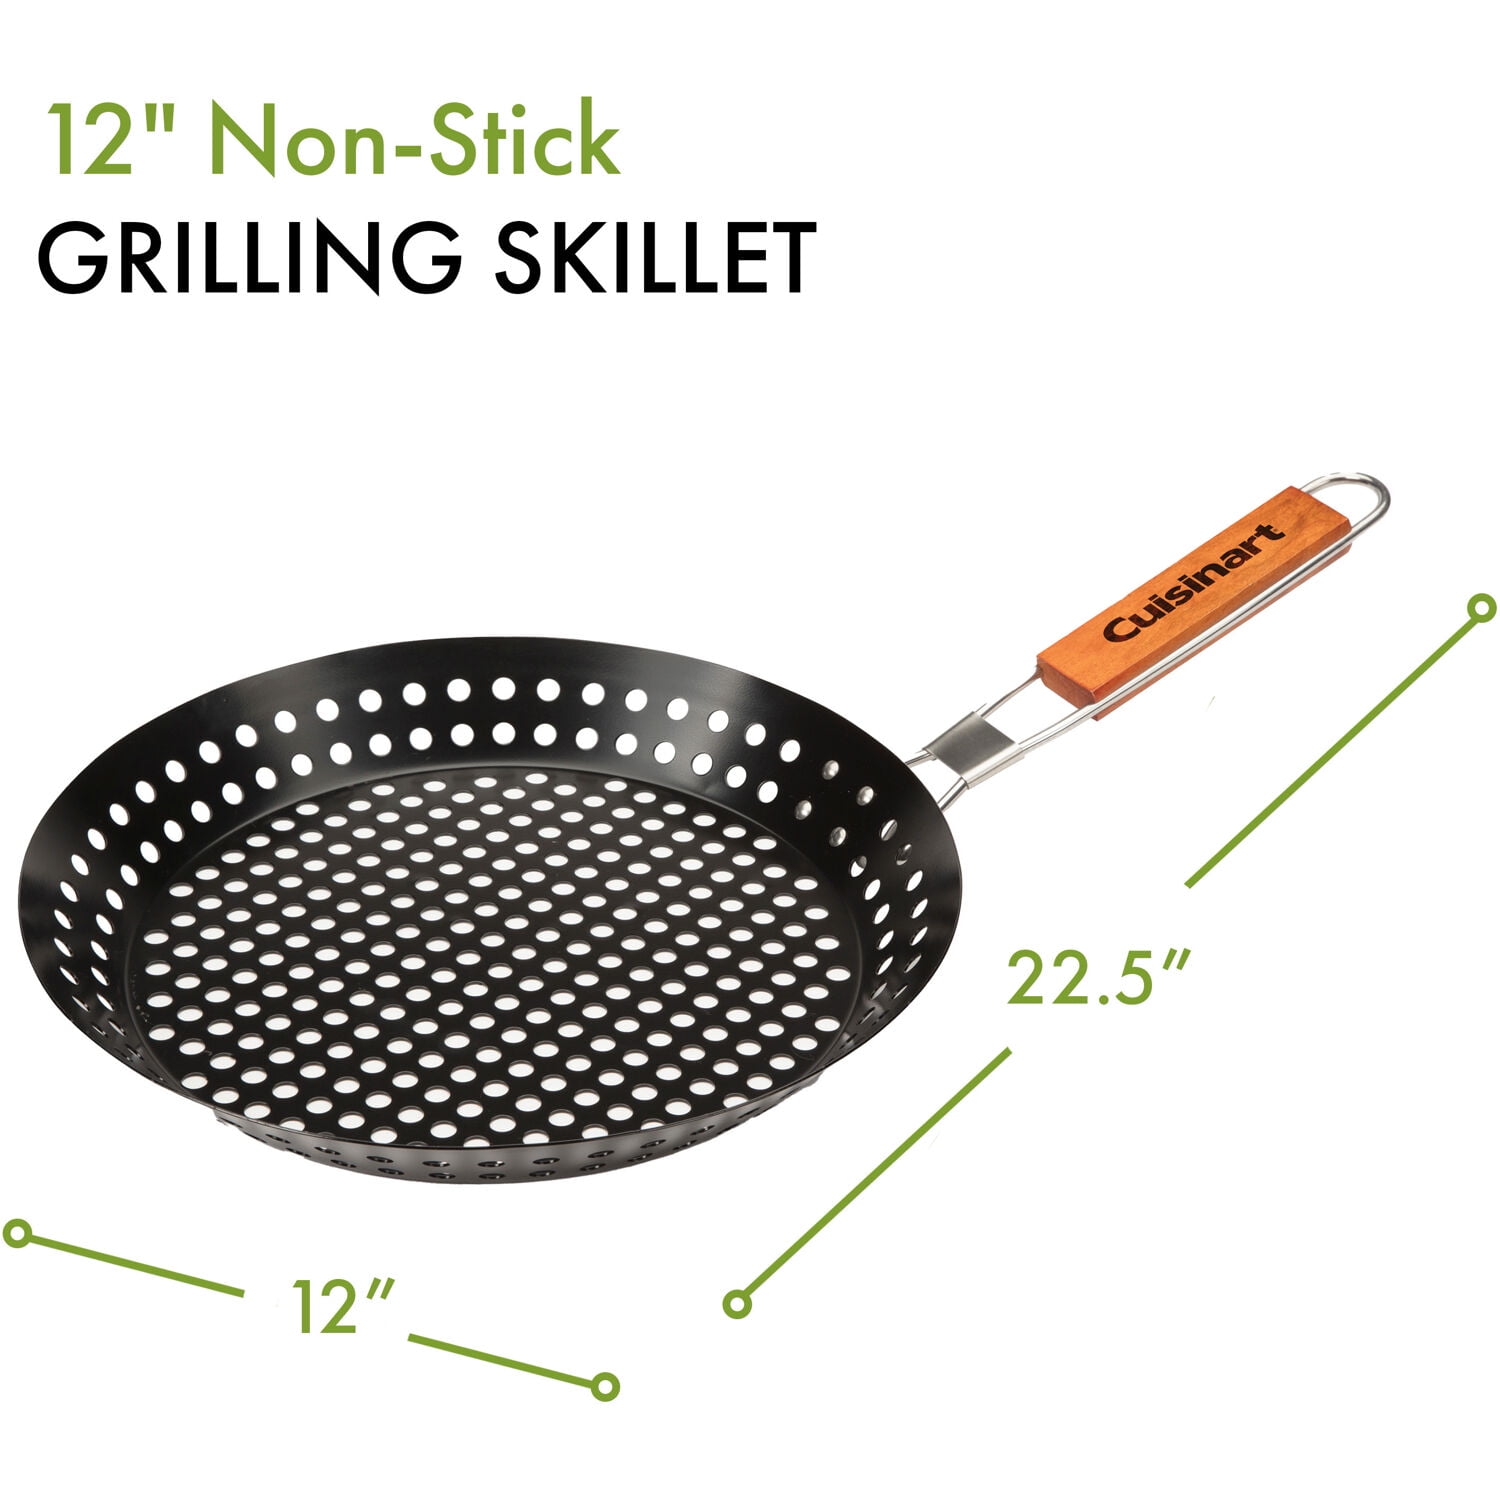 12 Non-Stick Grilling Skillet 